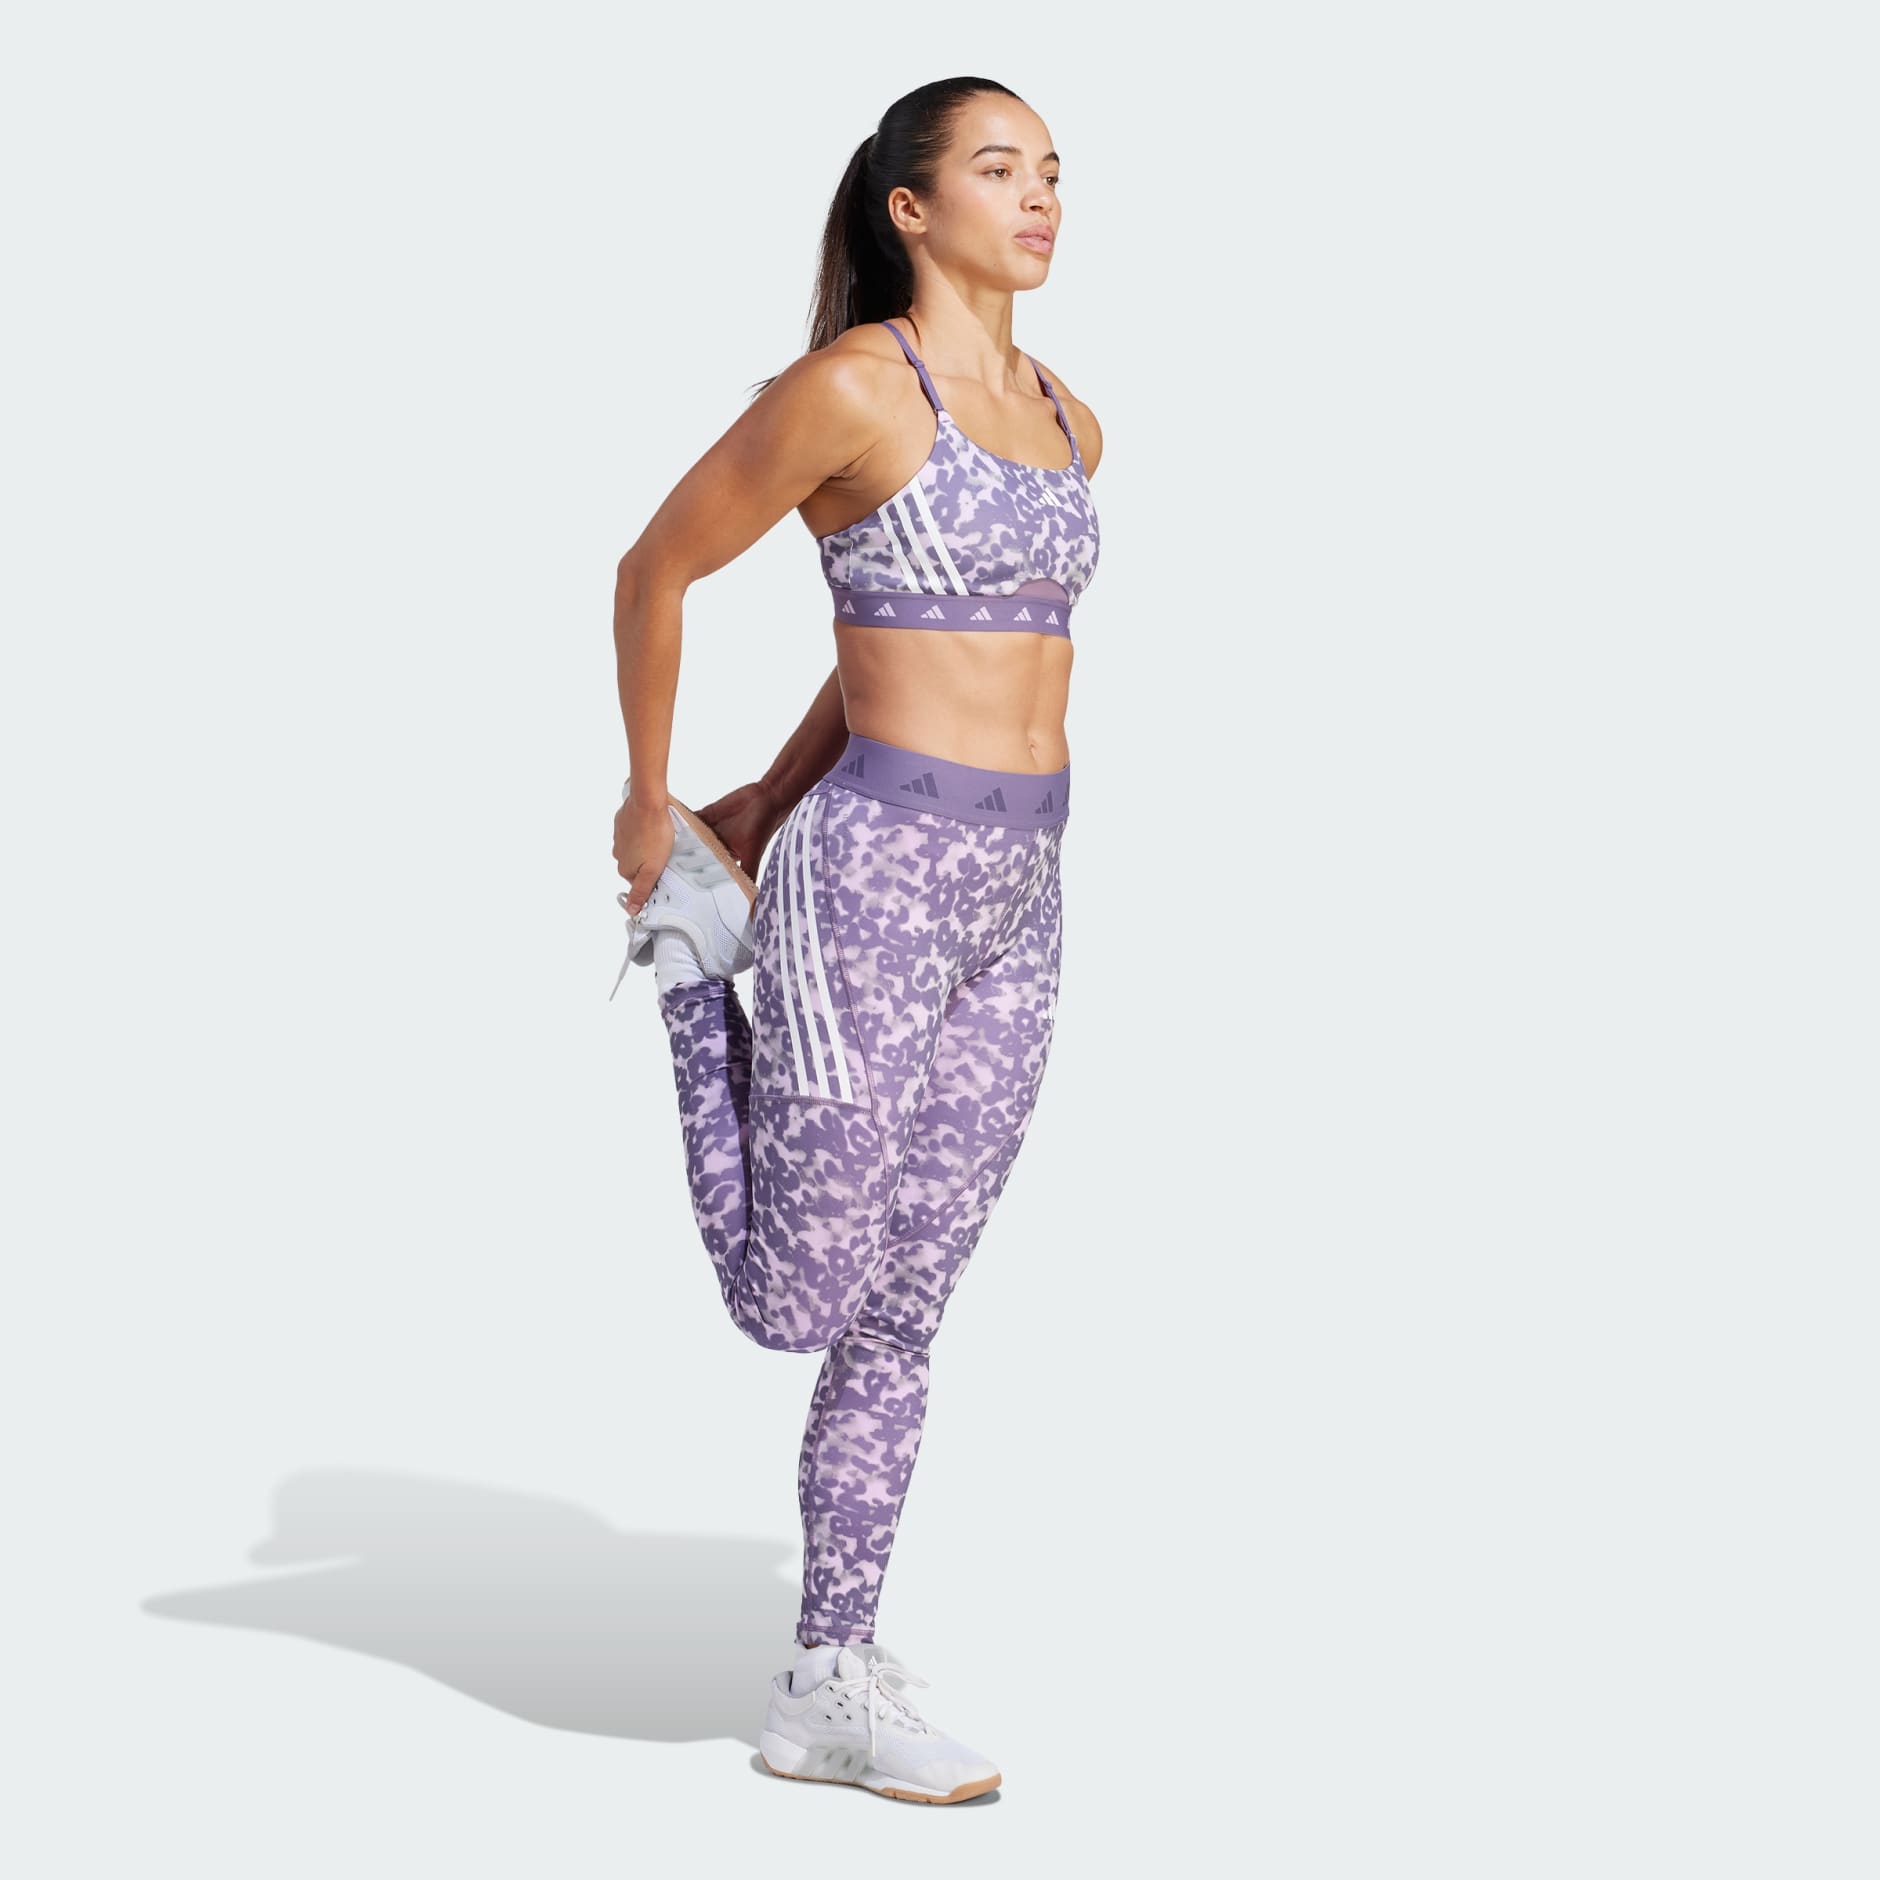 Women's Clothing - Aeroreact Hyperglam Light-Support Printed Bra - Purple